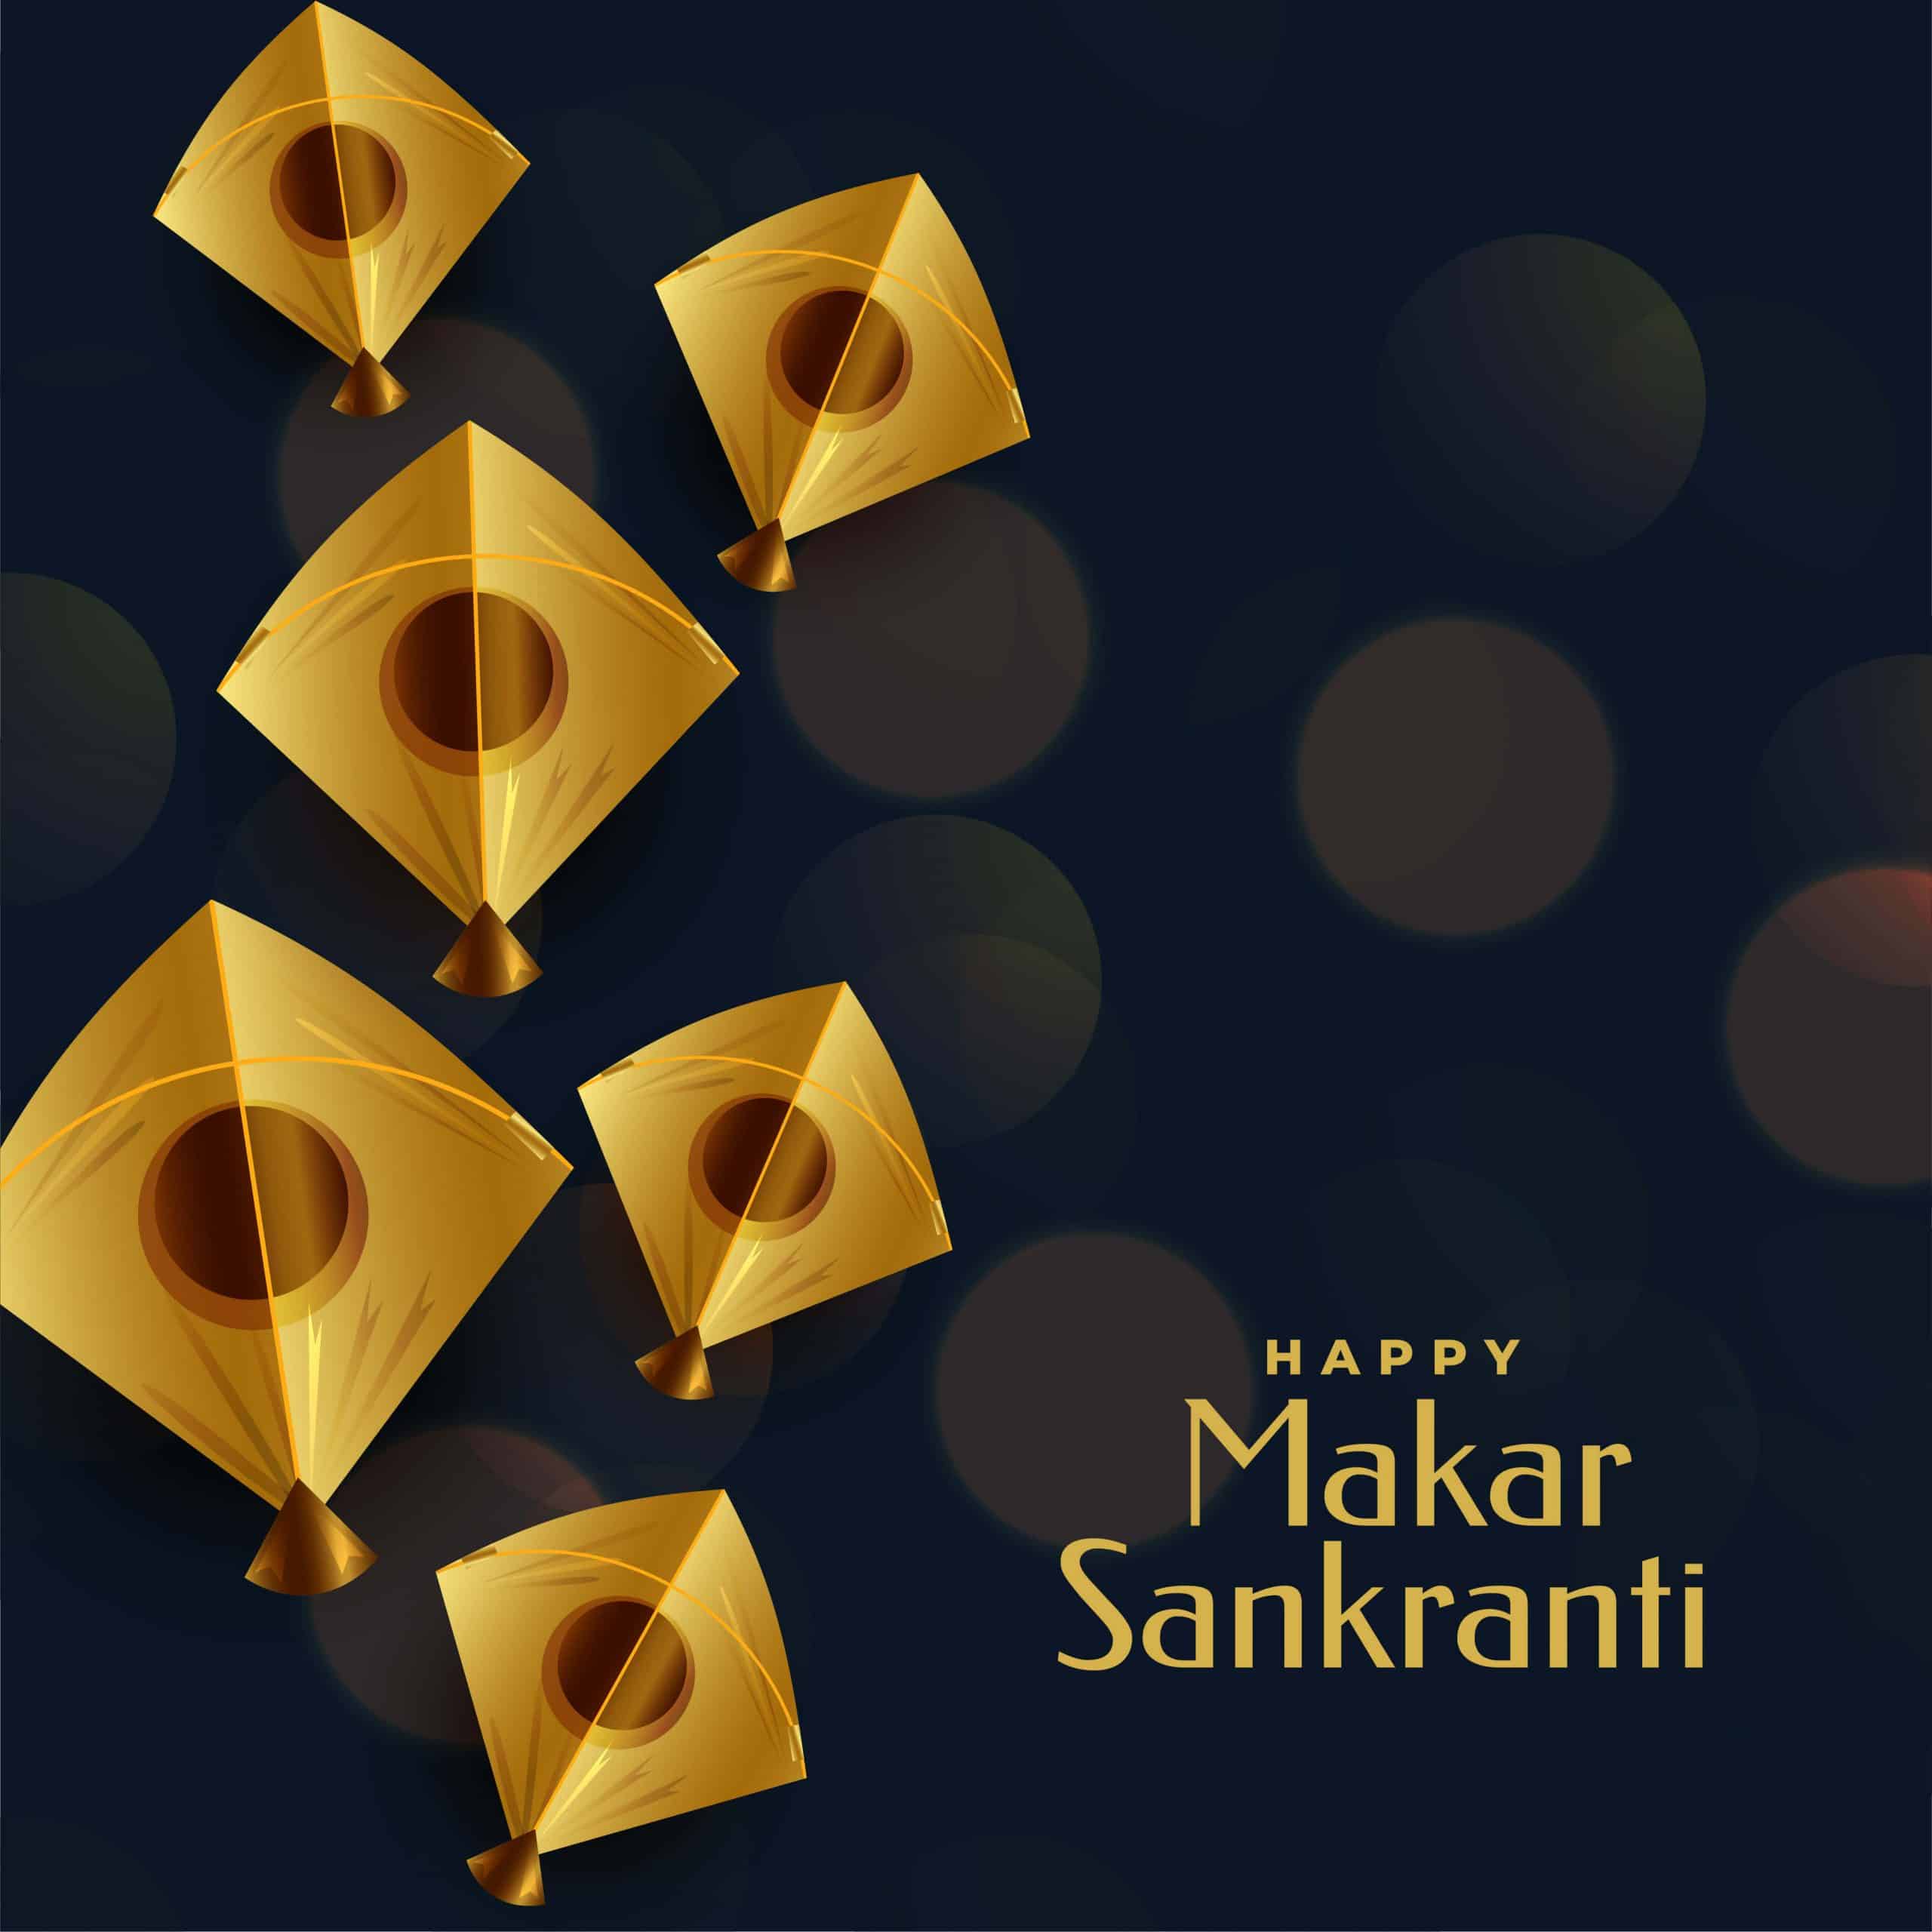 80+] Happy Makar Sankranti Images, Photo, Pic & Wallpaper (HD)